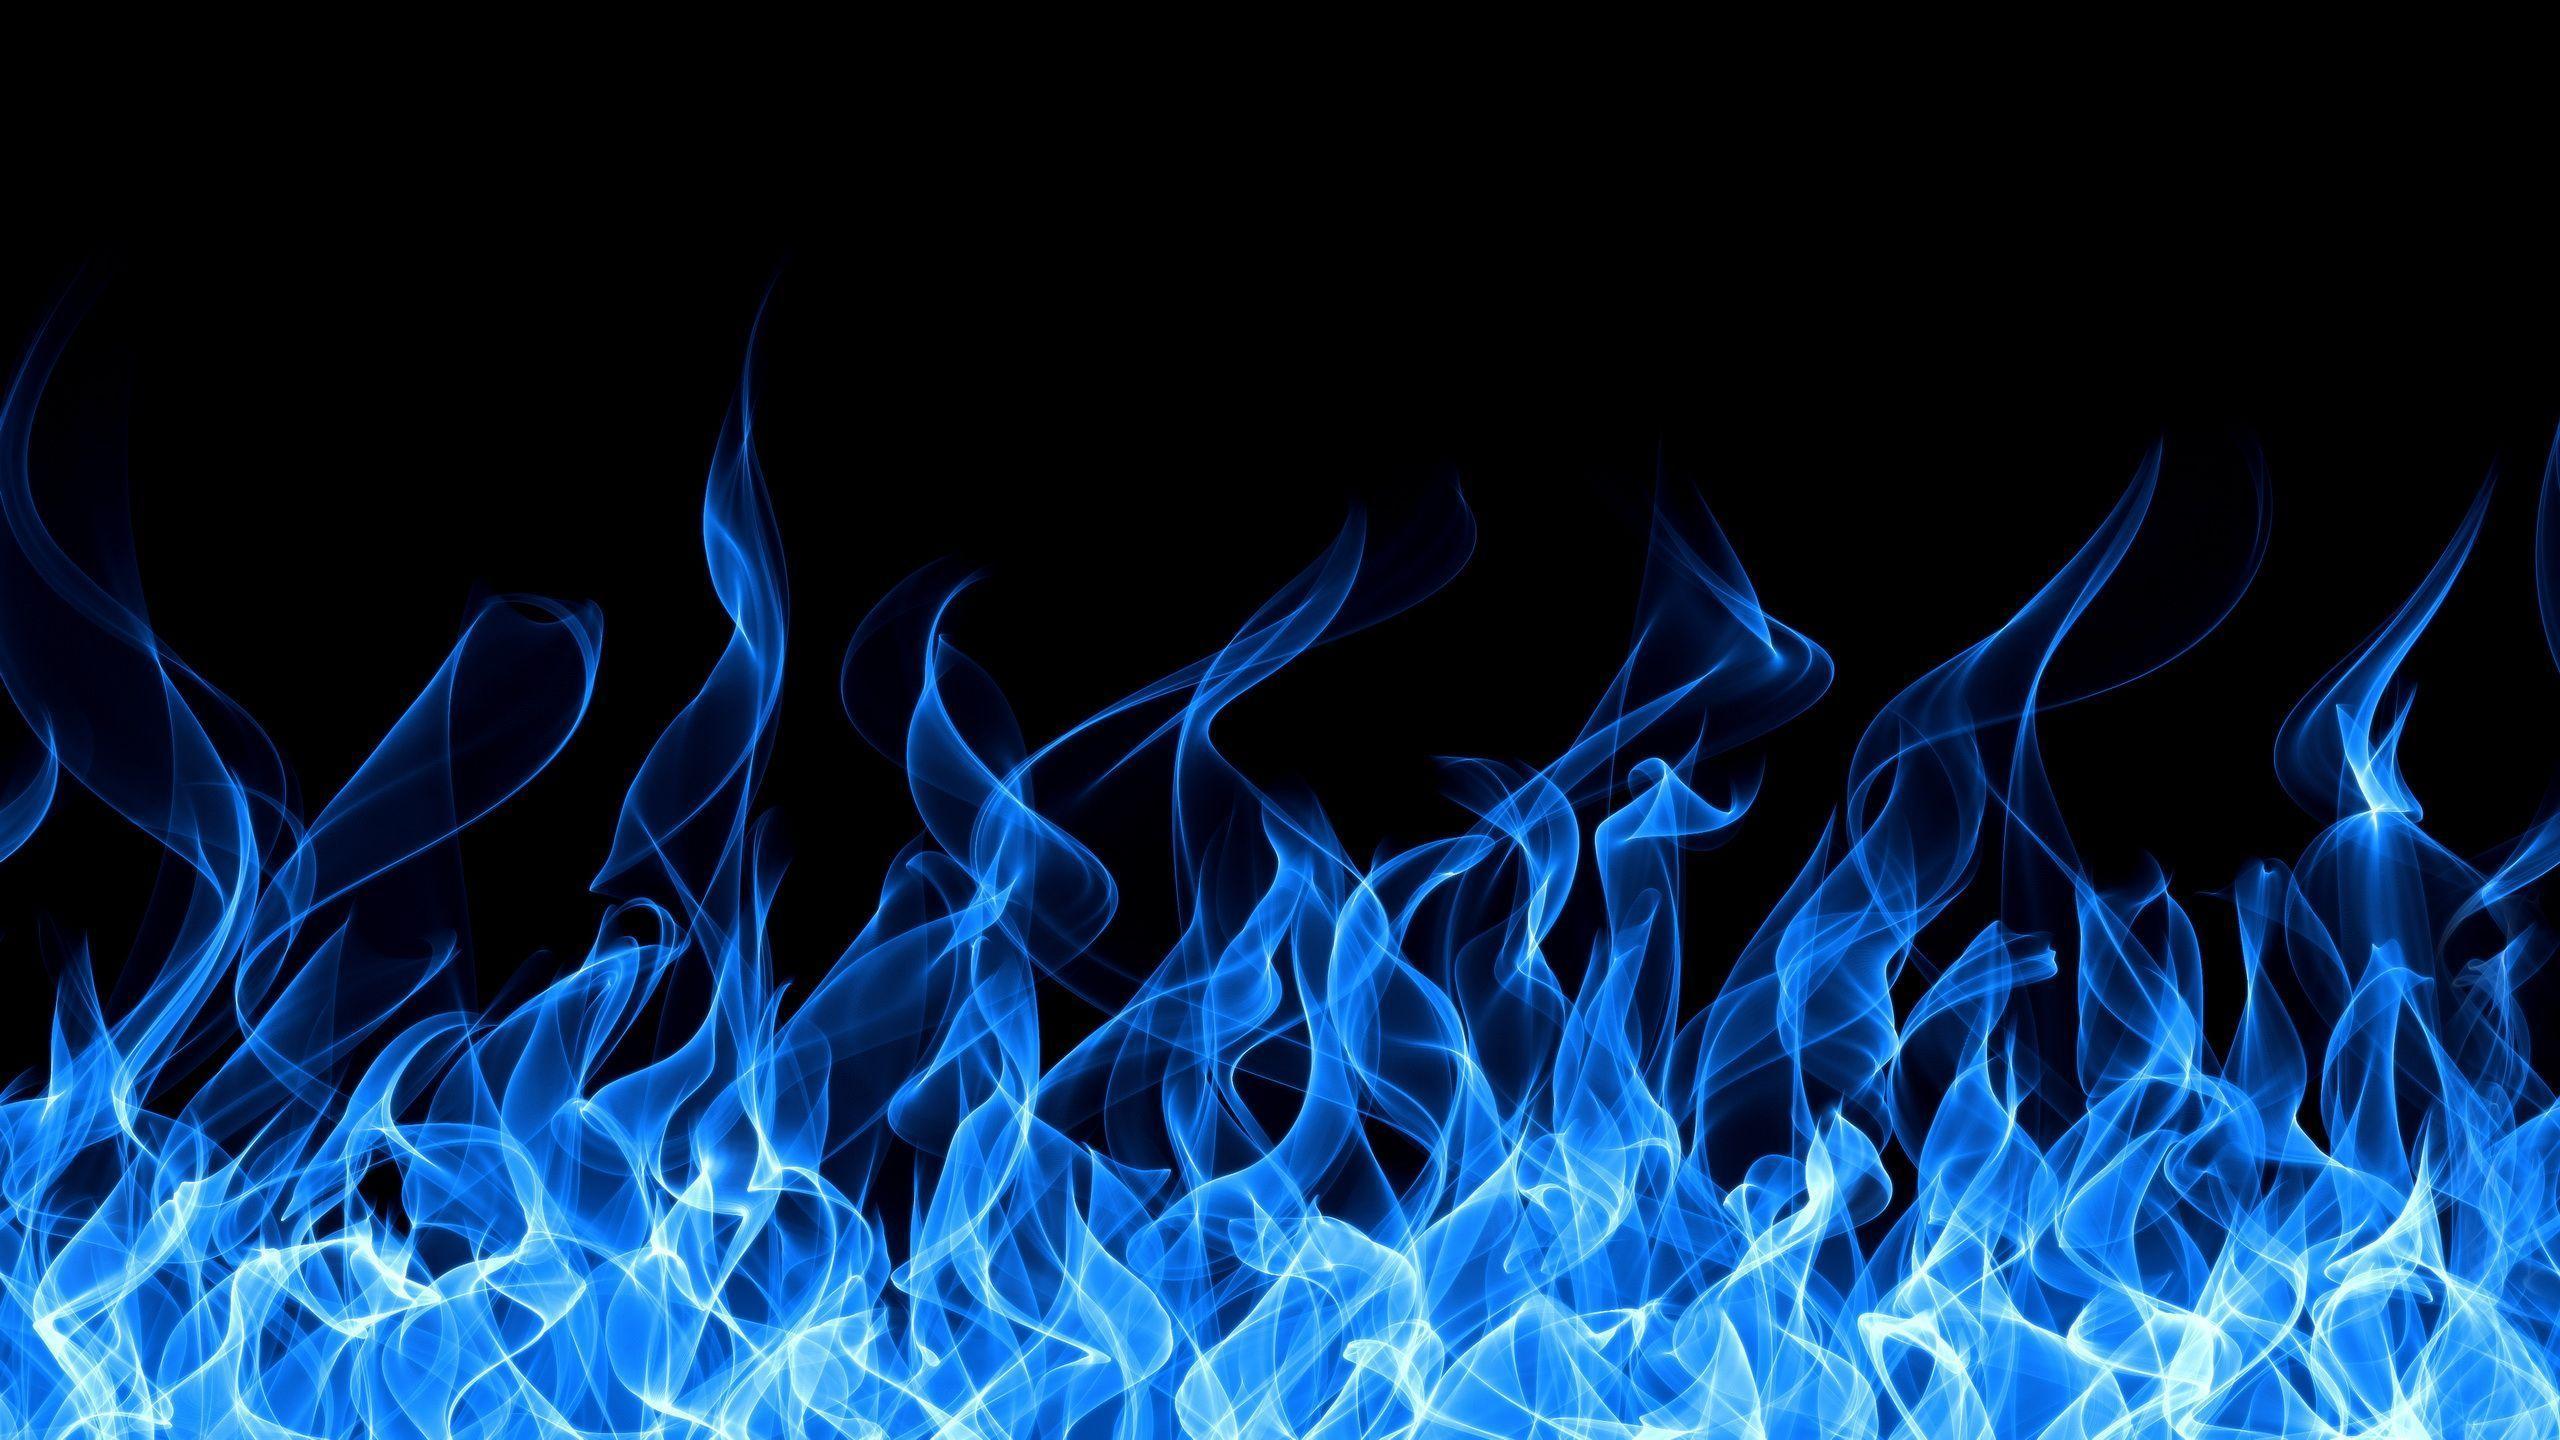 Blue Fire Wallpaper HD. Wallpaper, Background, Image, Art Photo